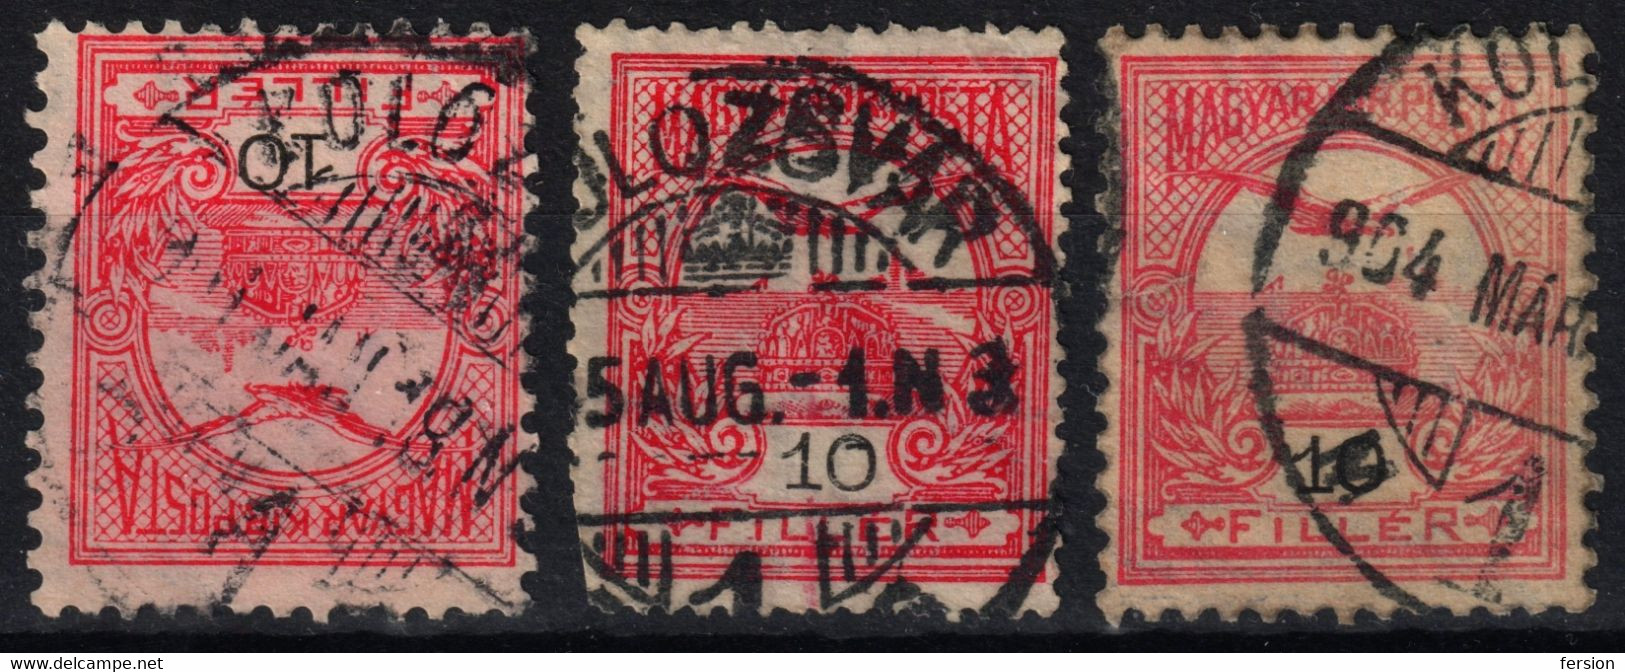 KOLOZSVÁR CLUJ-NAPOCA Postmark LOT TURUL WMK 3. 1900 Hungary Romania Banat Transylvania KOLOZS County KuK K.u.K 10 Fill - Siebenbürgen (Transsylvanien)